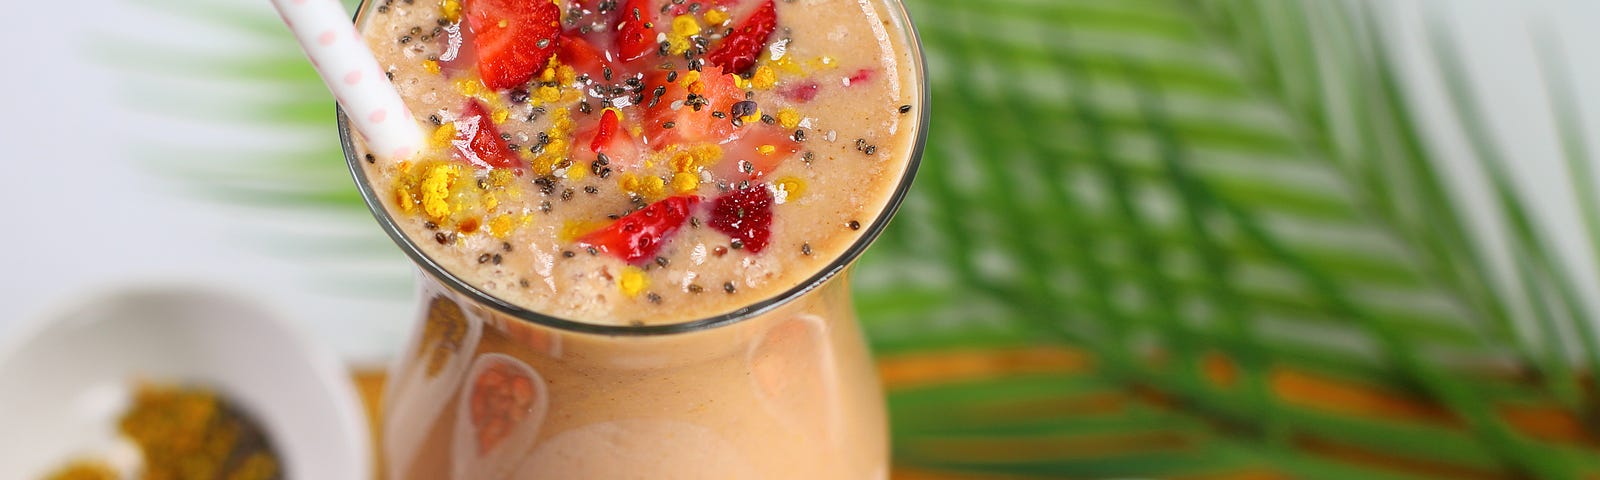 Photo of Island Breeze Smoothie recipe in smoothies, juices, or milkshakes.